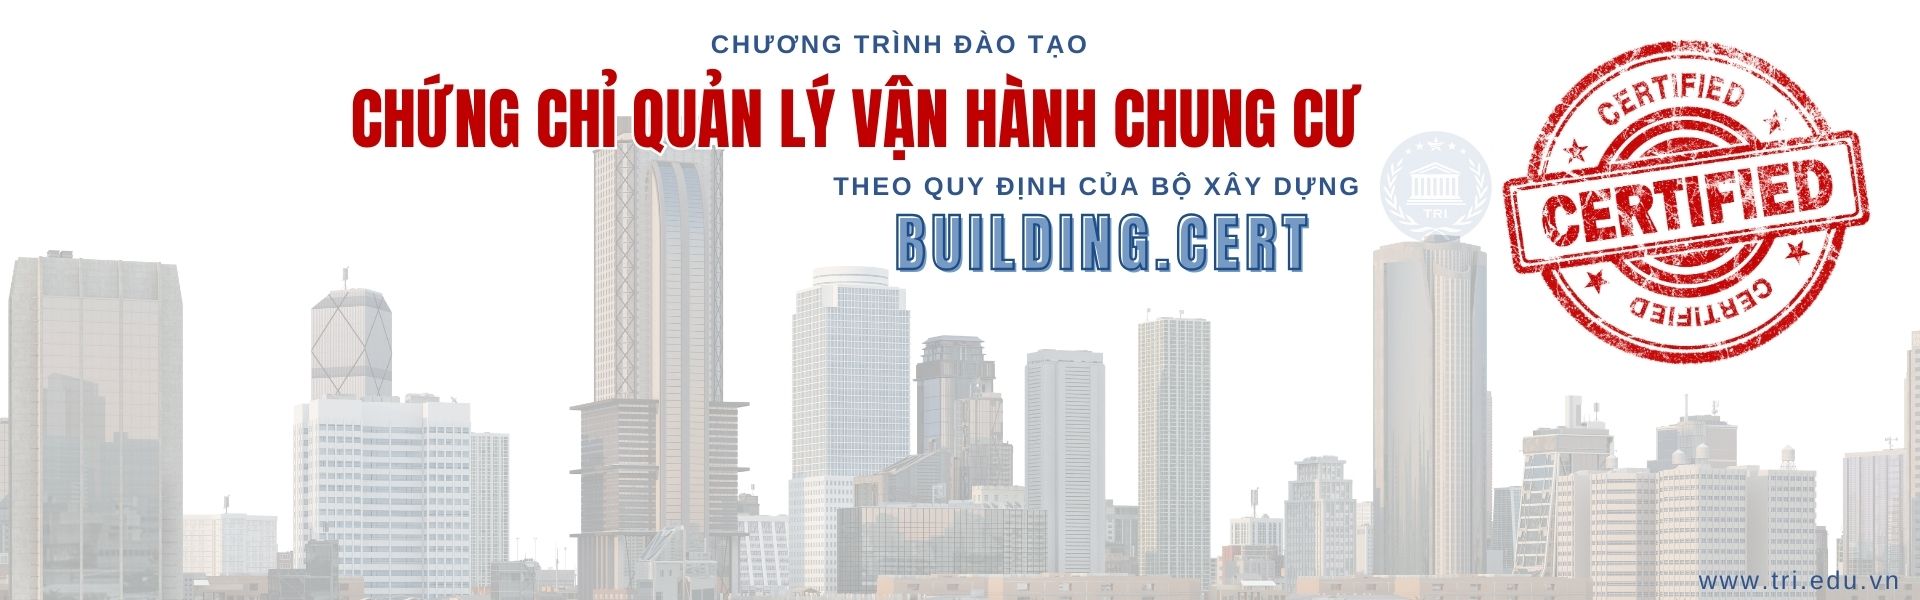 CHUNG CHI QUAN LY VAN HANH CHUNG CU BUILDING.CERT